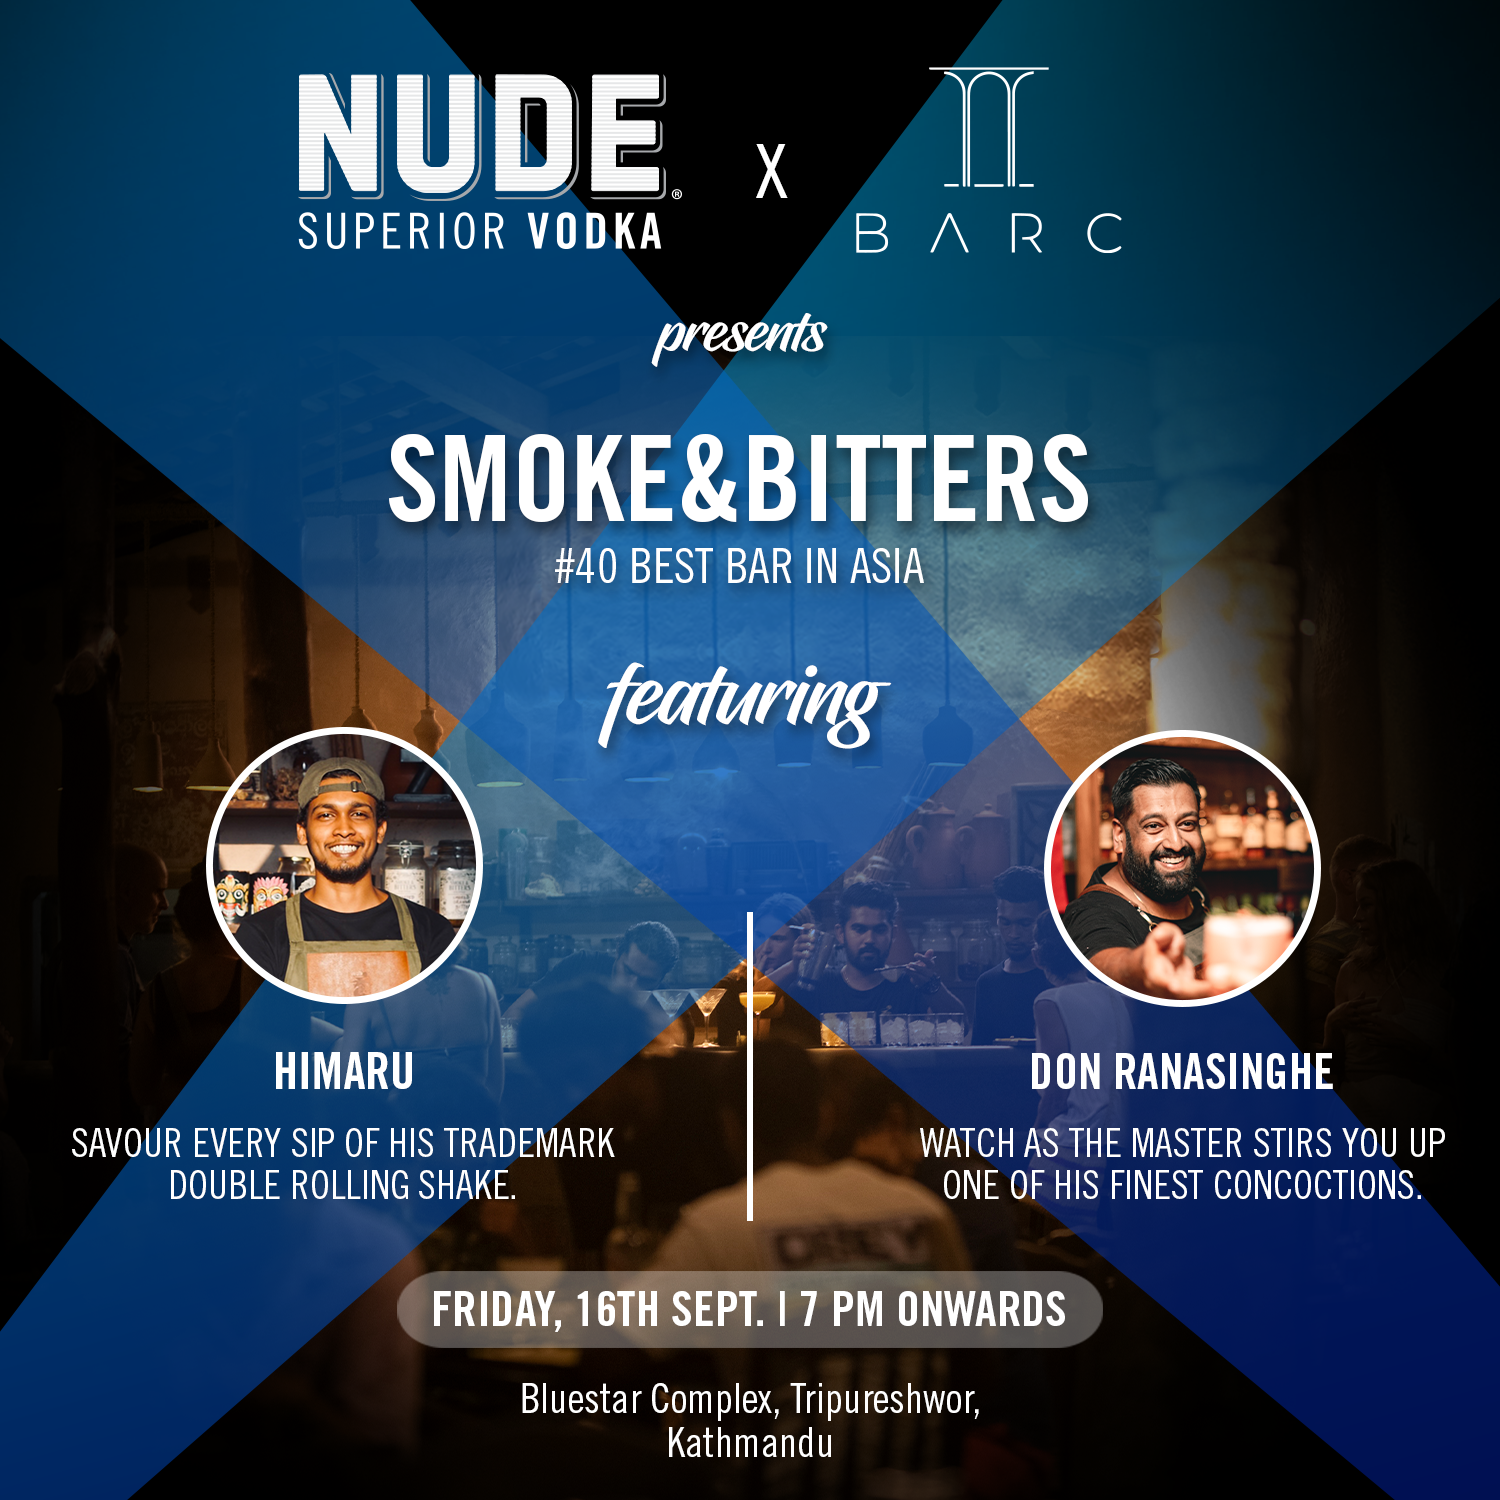 NUDE x BARC featuring Smoke & Bitters